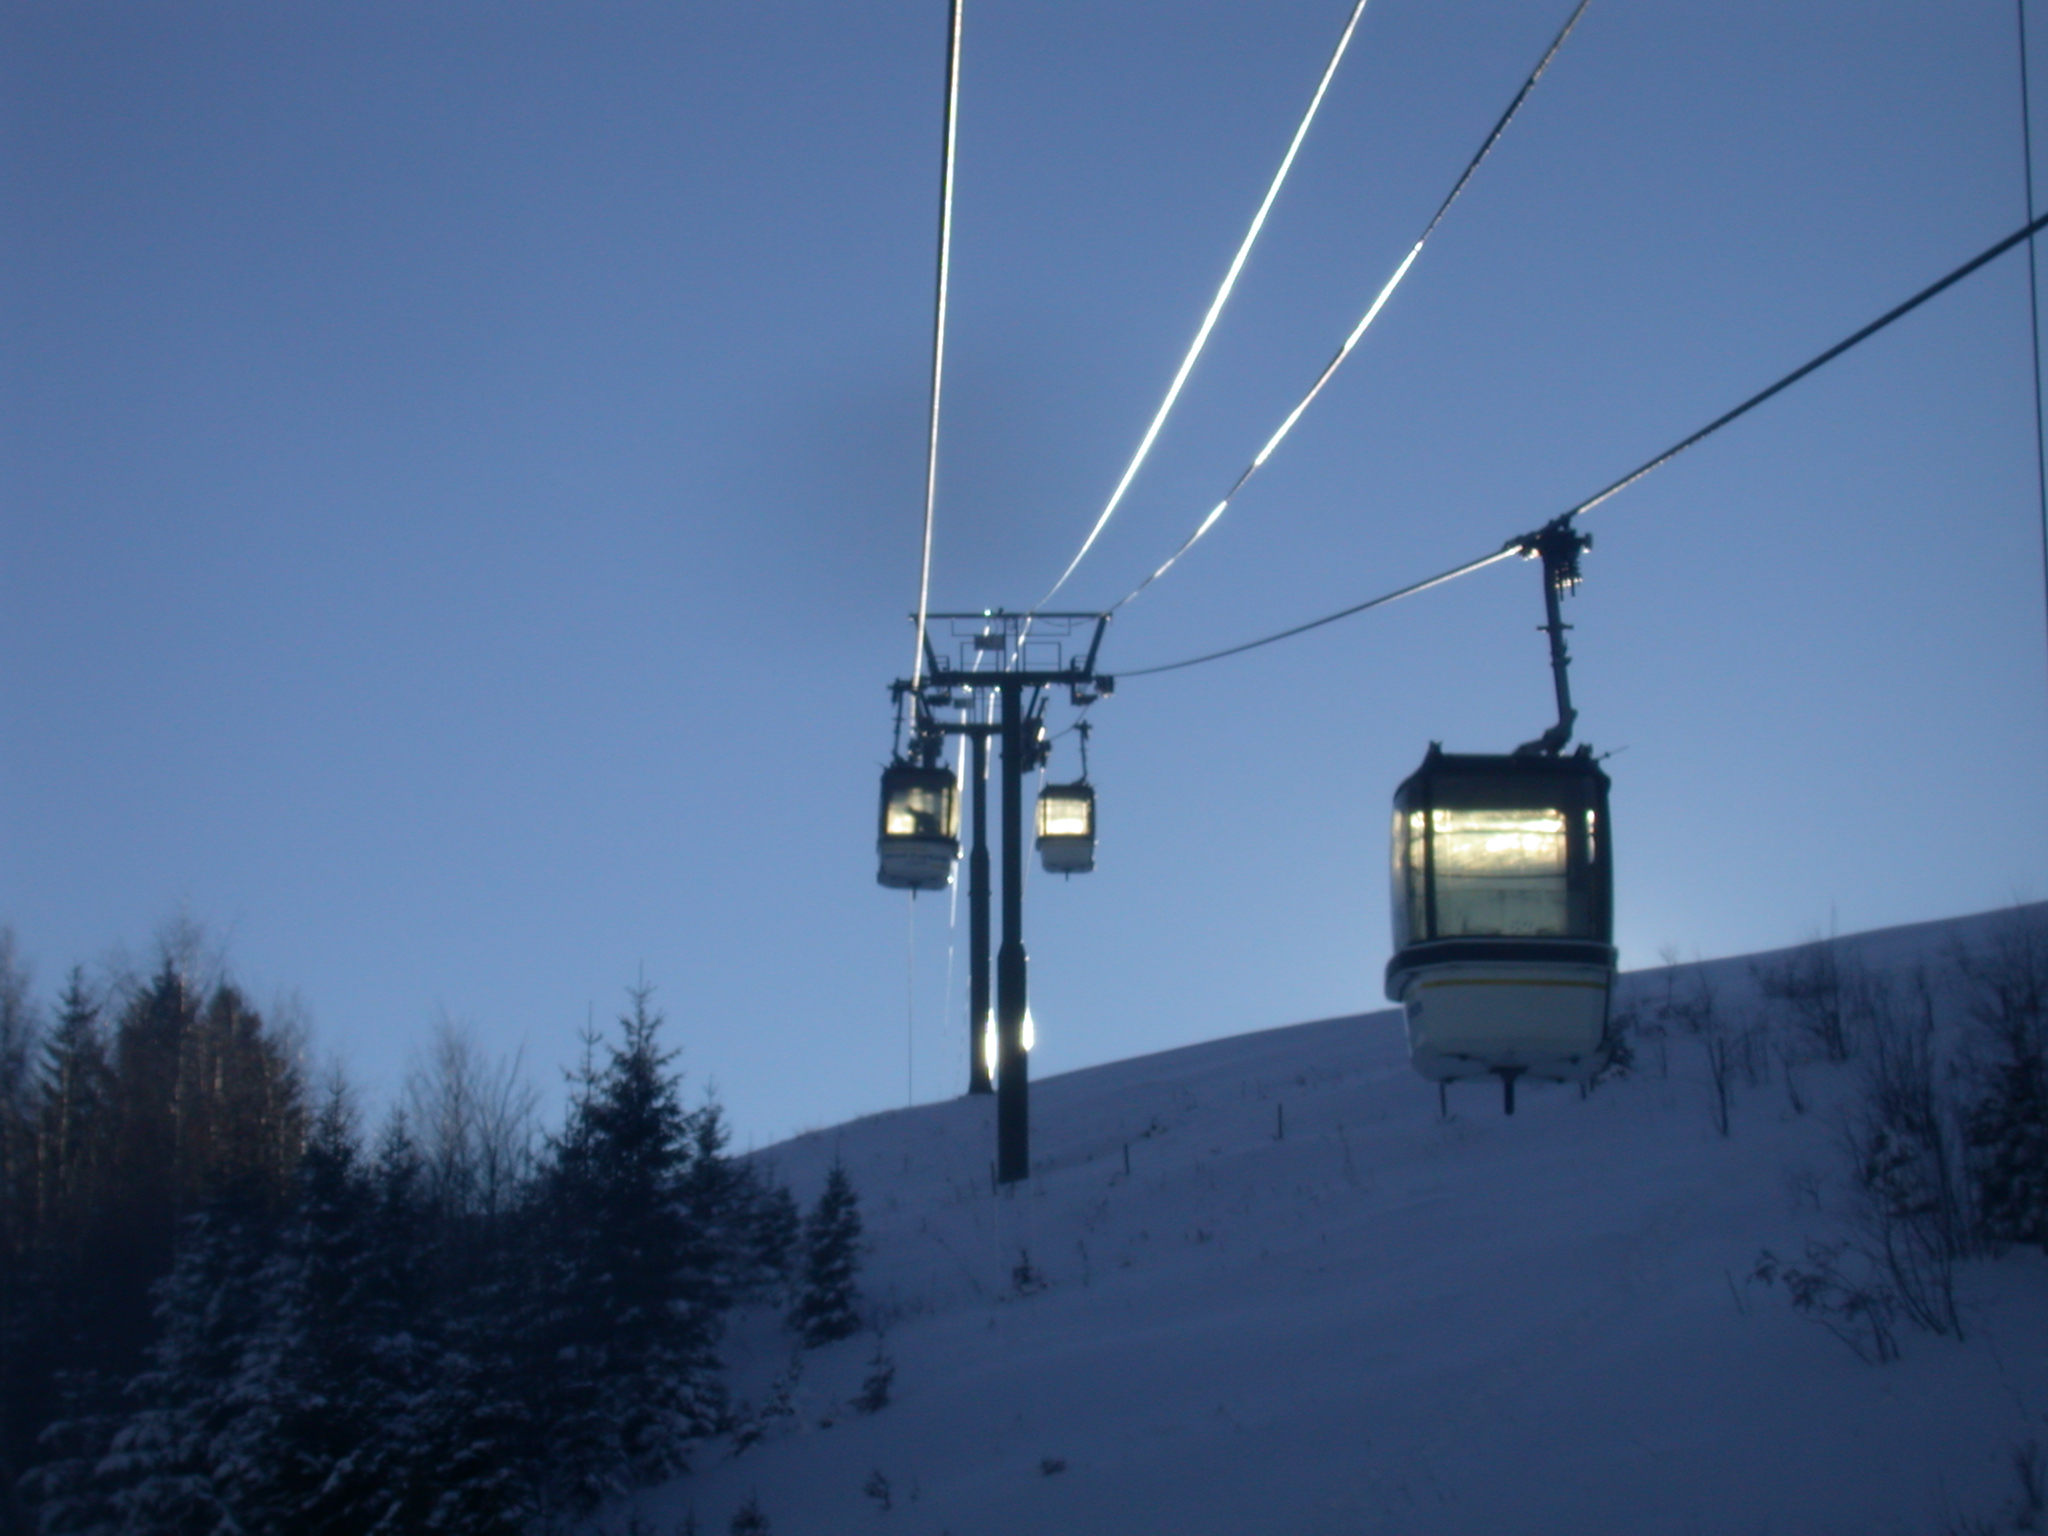 ski lift skilift mountain mountainside transportation holiday skiing